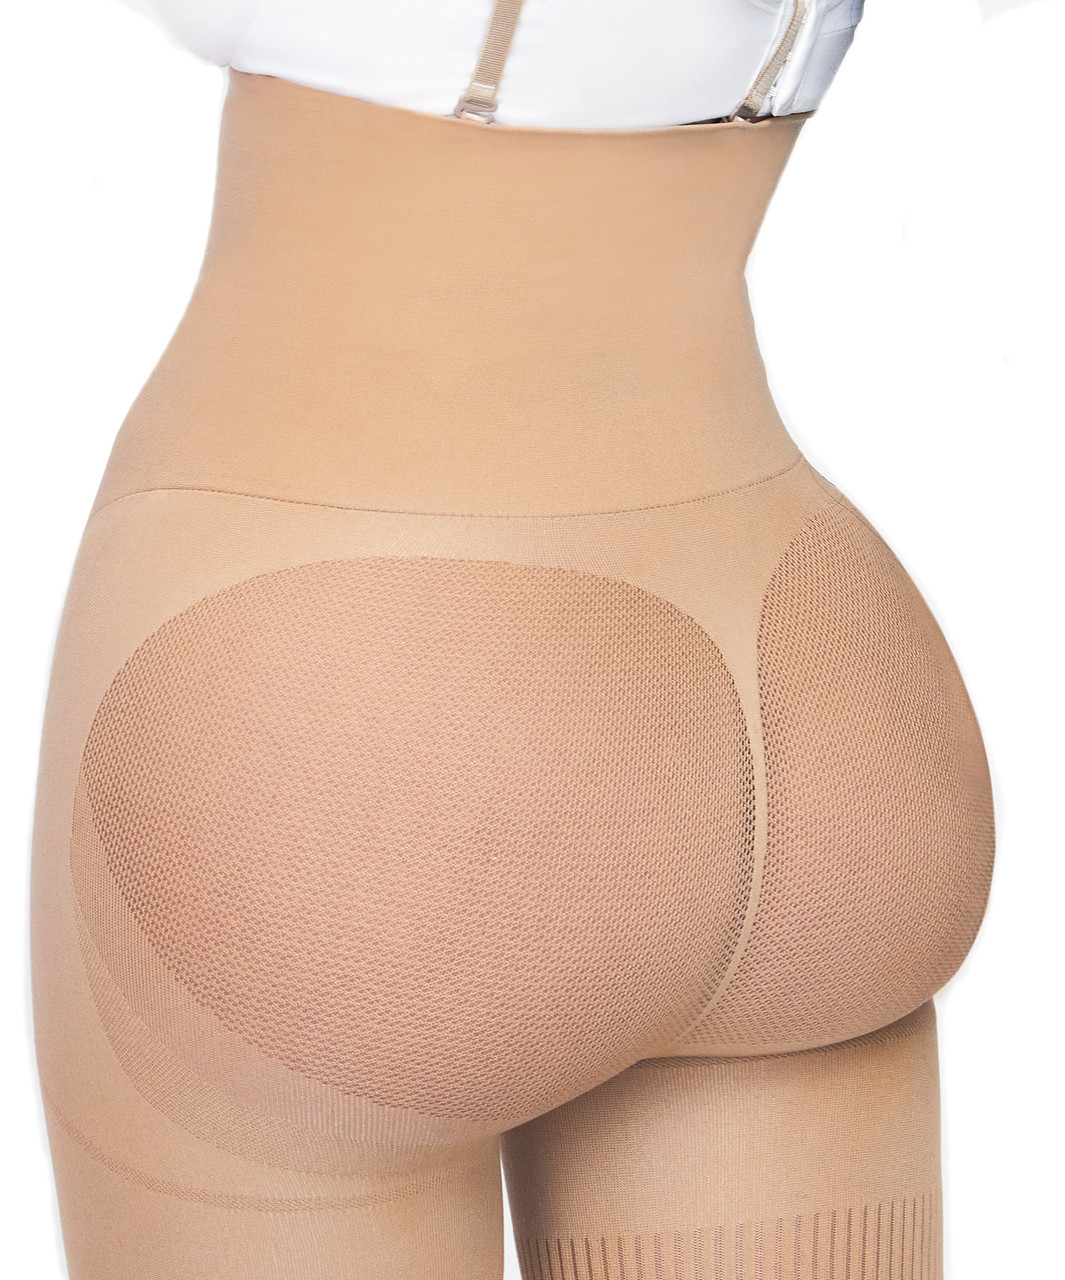 JOAU No Show Shapewear for Women Tummy Control High Waisted Butt